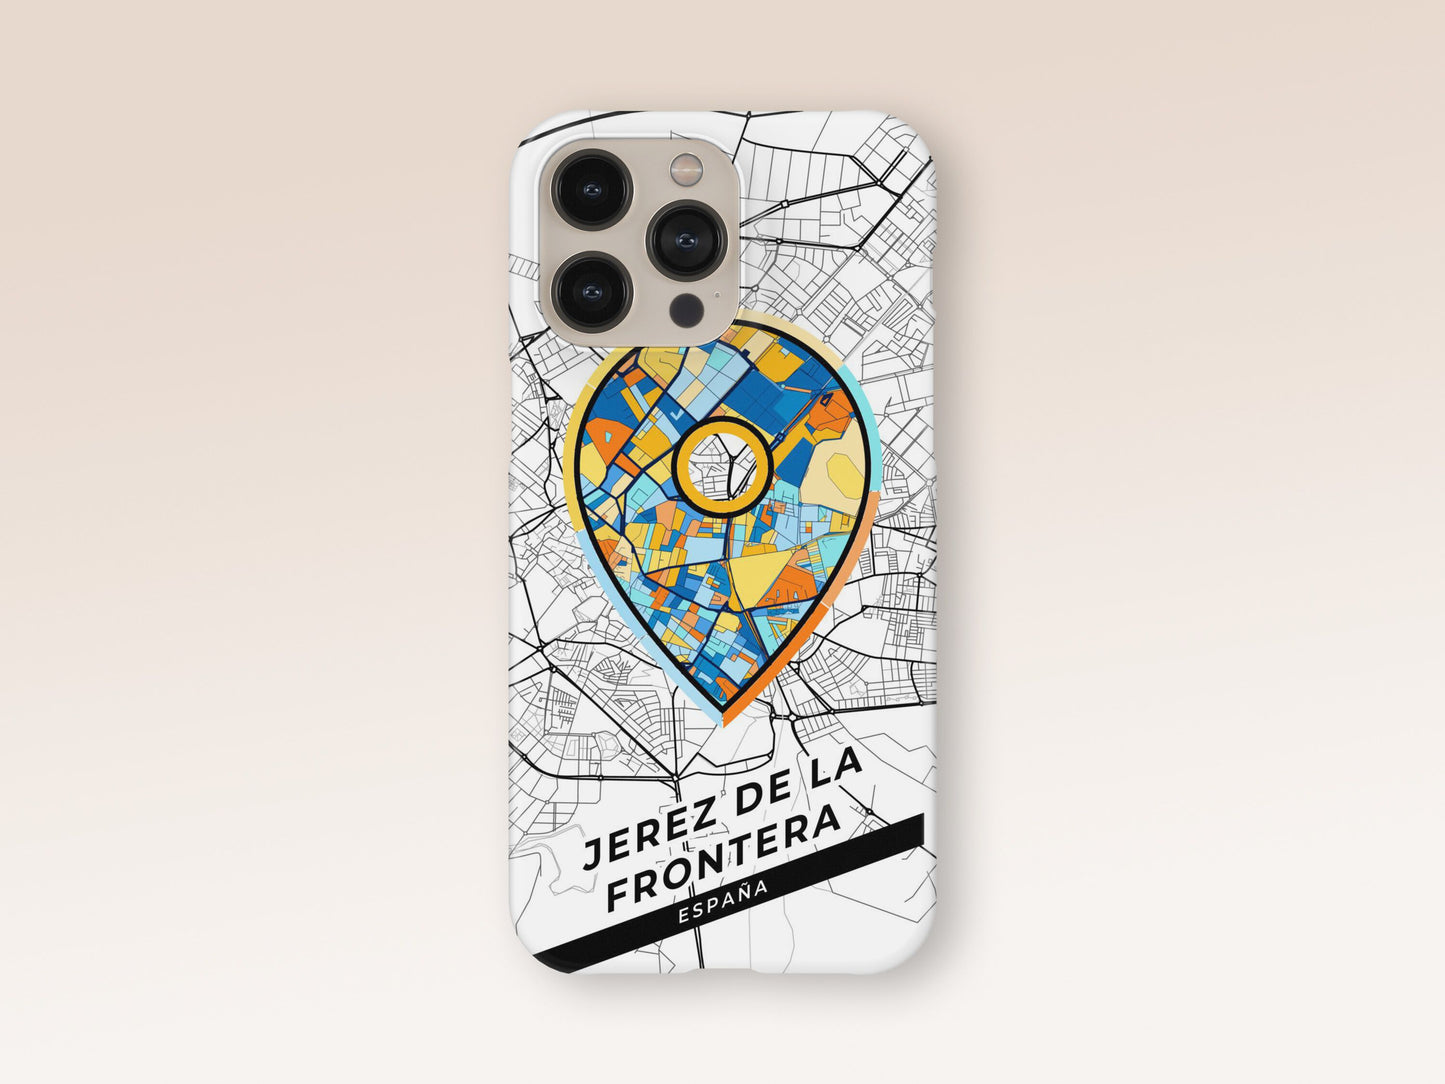 Jerez De La Frontera Spain slim phone case with colorful icon. Birthday, wedding or housewarming gift. Couple match cases. 1